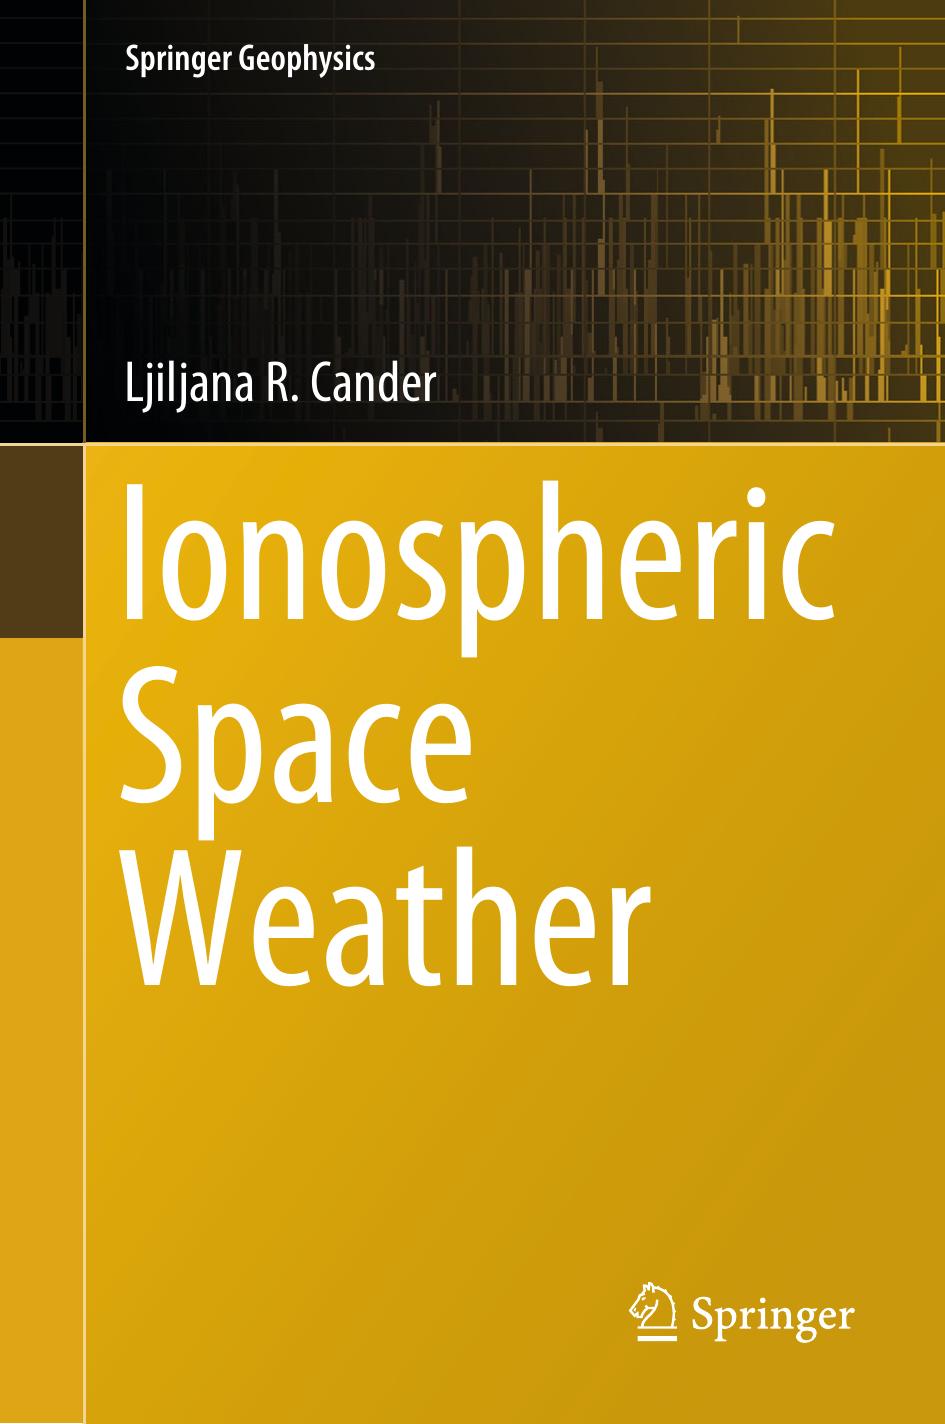 Ionospheric Space Weather by Ljiljana R. Cander